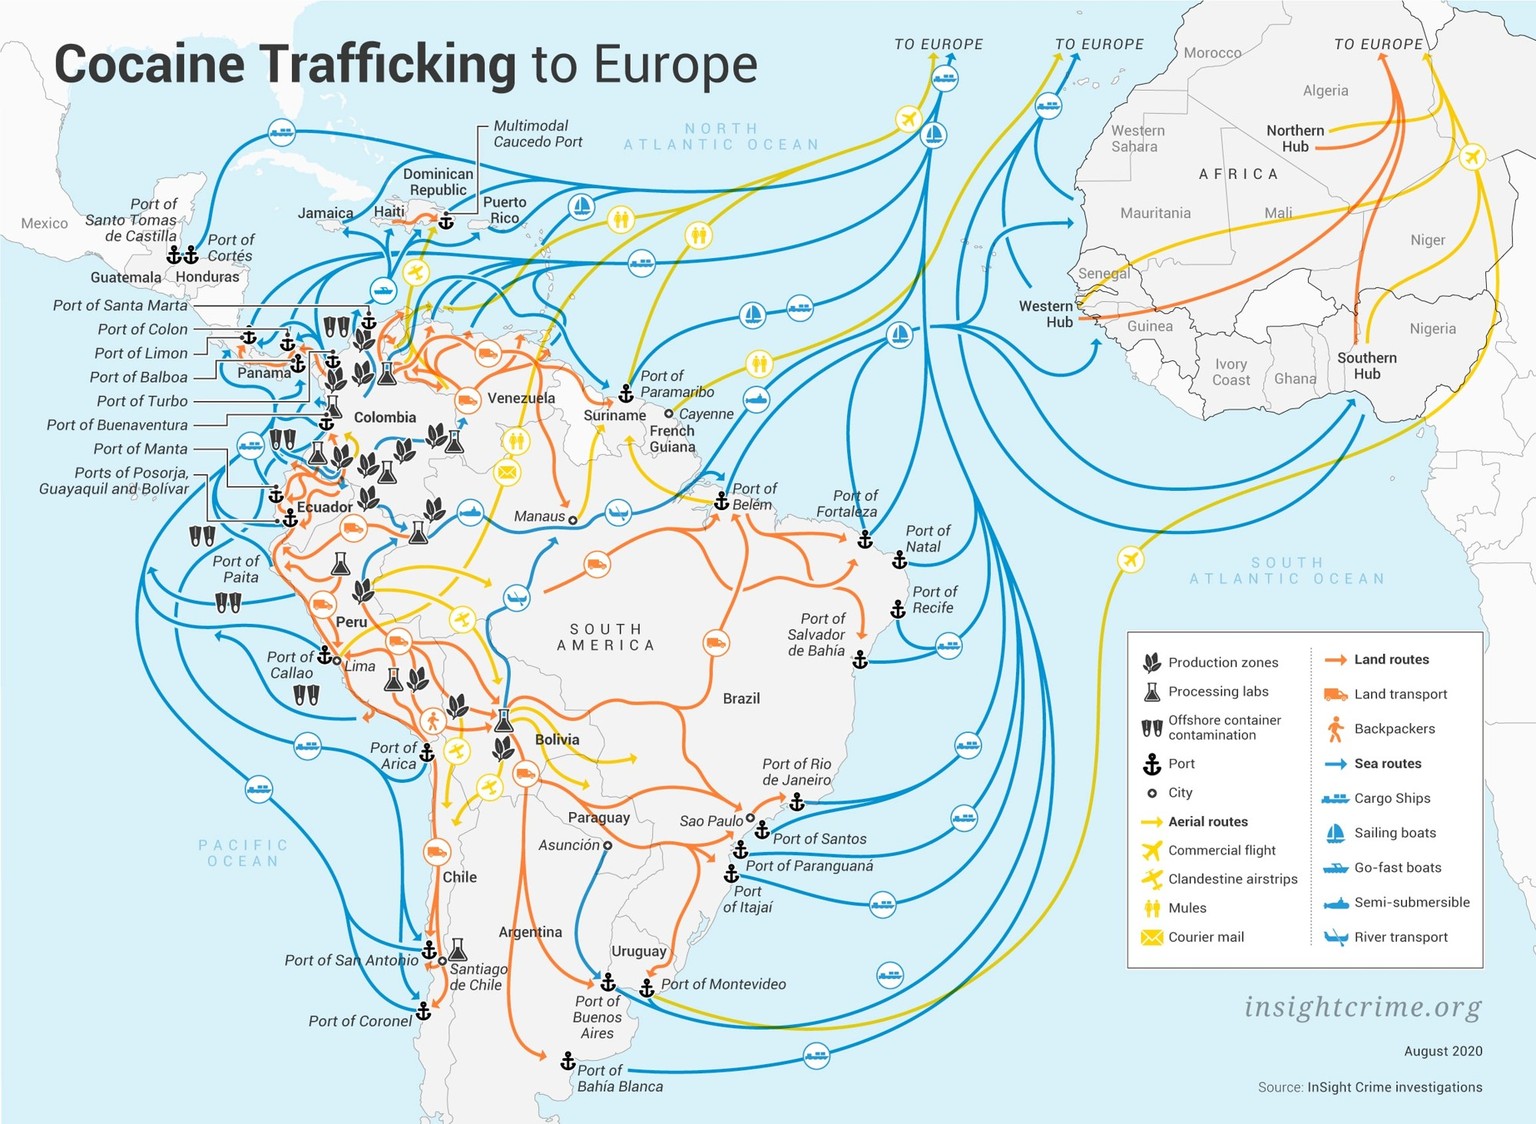 Kokain-Schmuggel nach Europa
https://insightcrime.org/investigations/cocaine-europe-underestimated-threat/